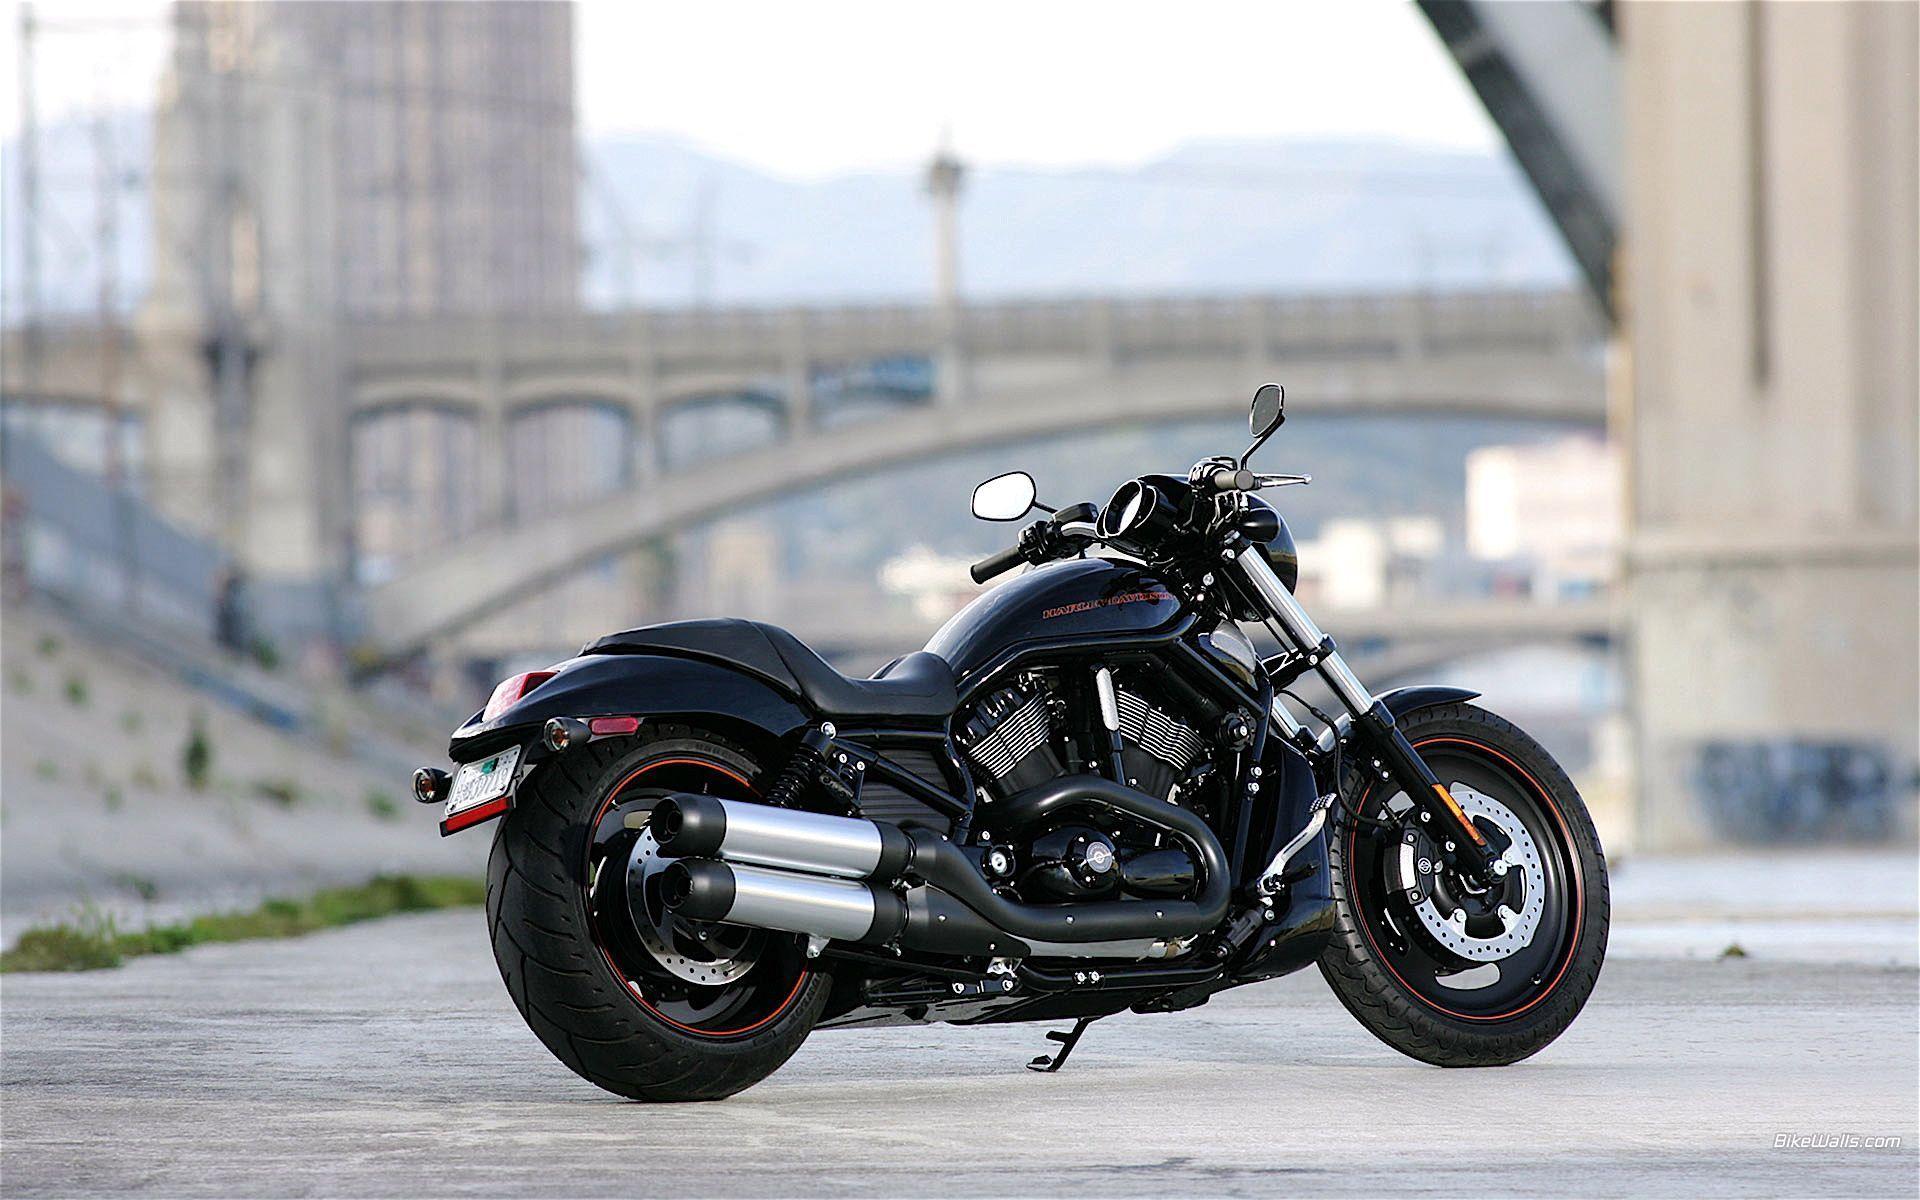 image For > Harley Davidson Motorcycles Wallpaper